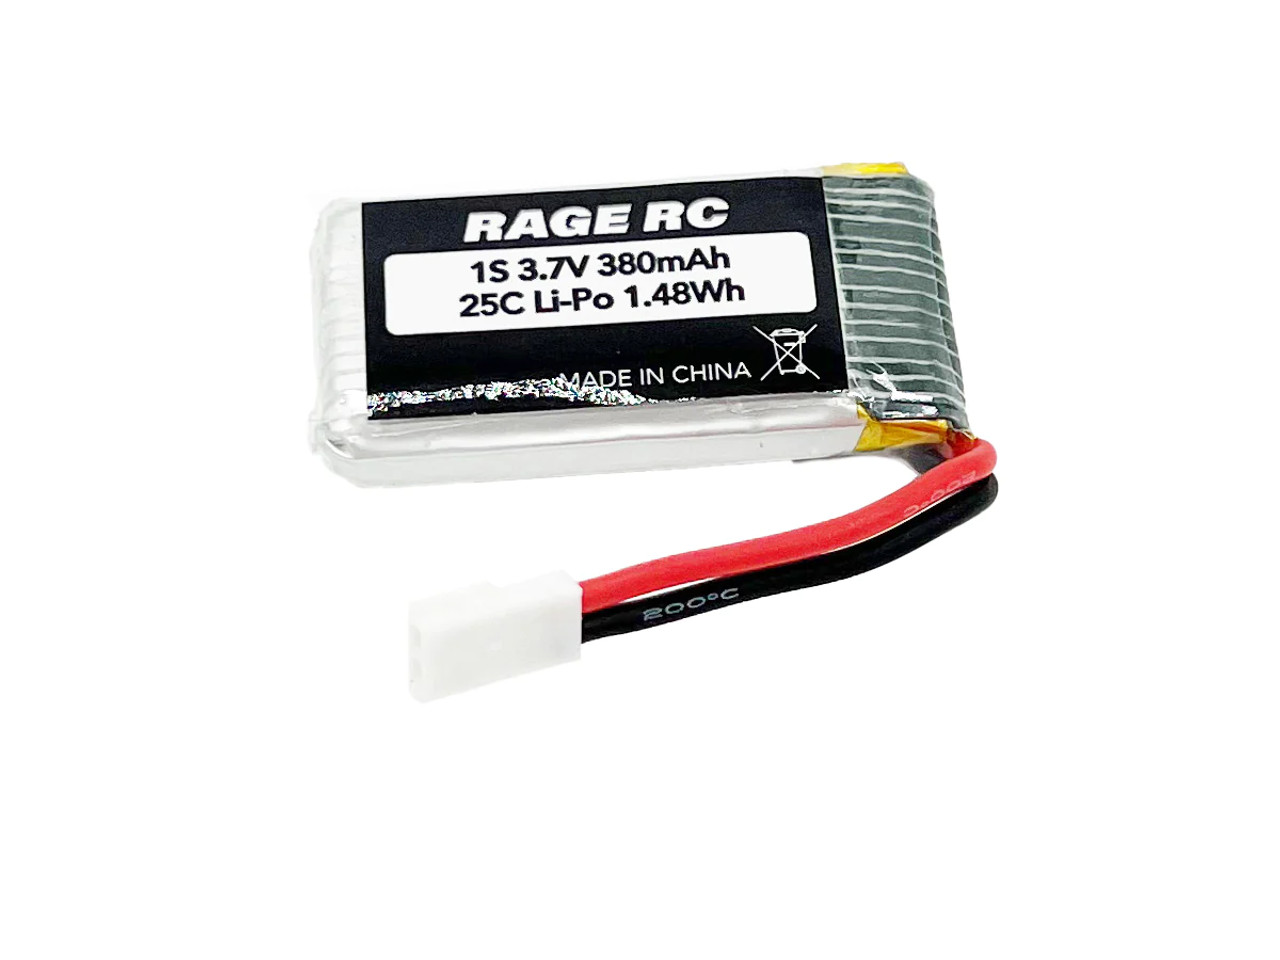 Rage RC 3.7V 380mAh 1S Lipo Battery; Jetpack Commander XL